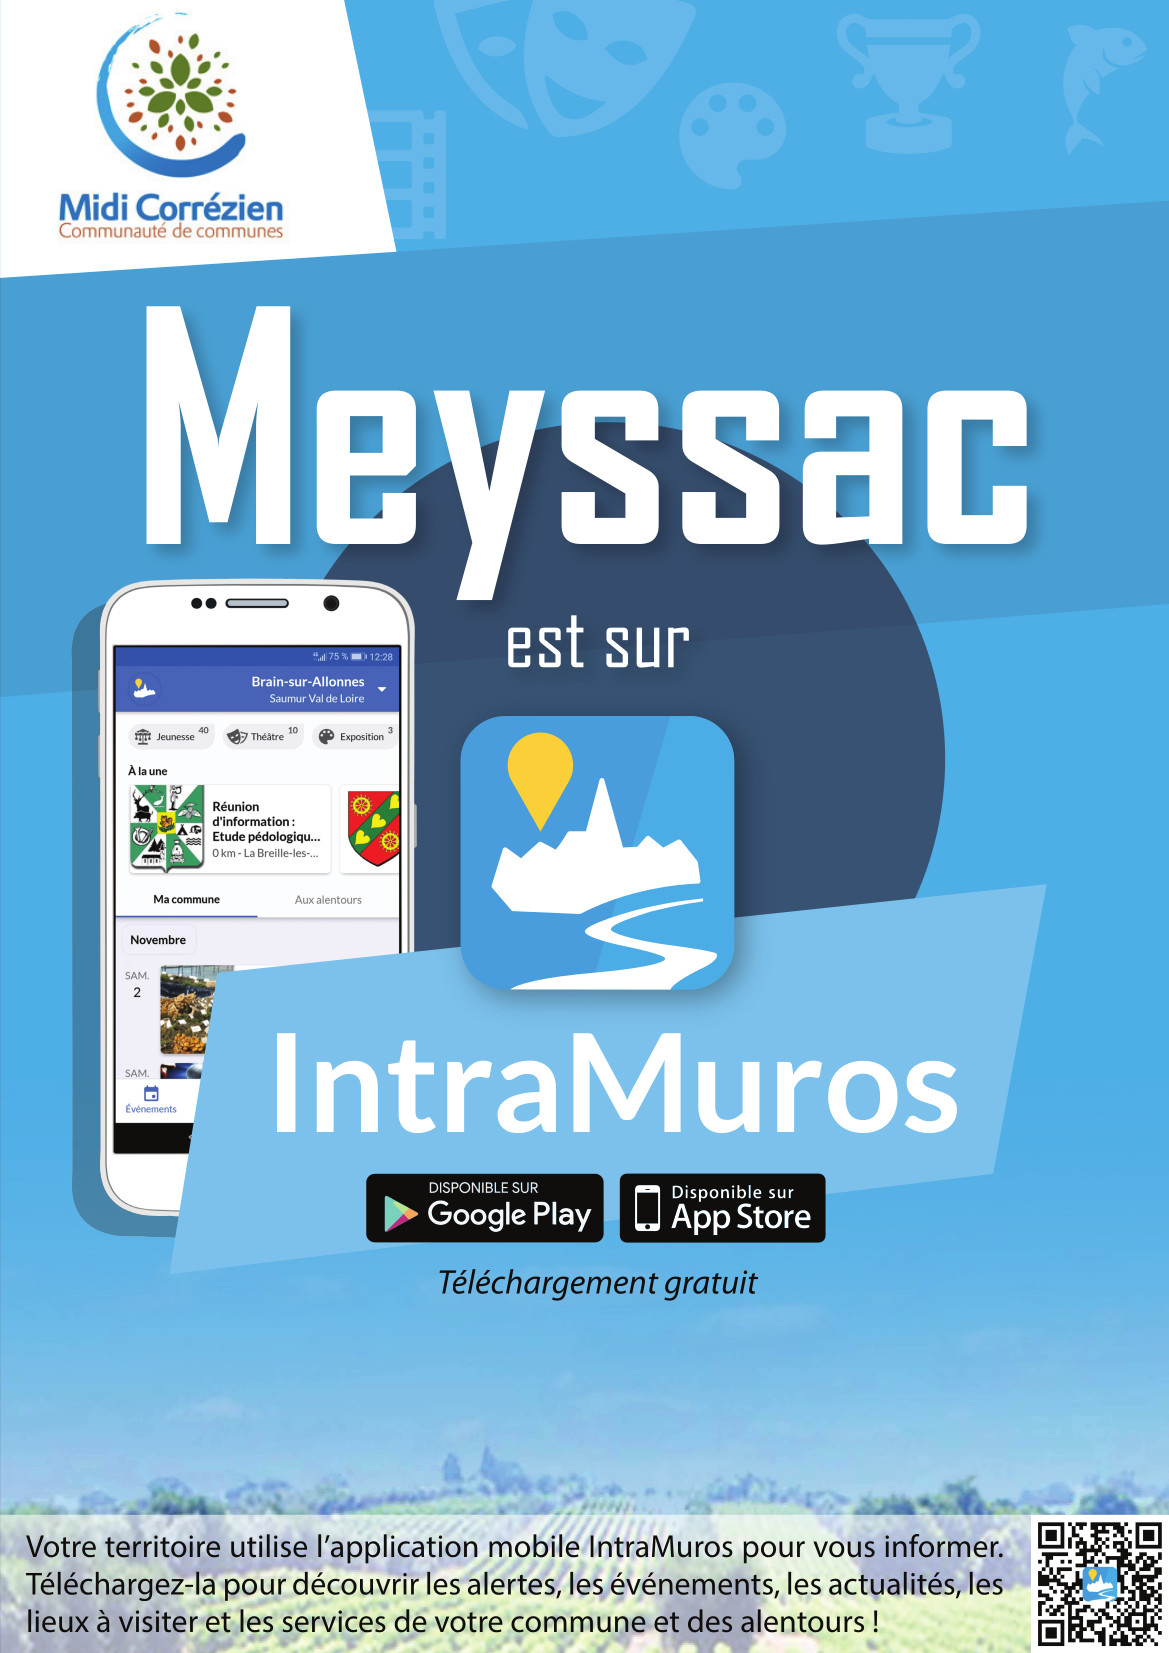 Meyssac est sur IntraMuros